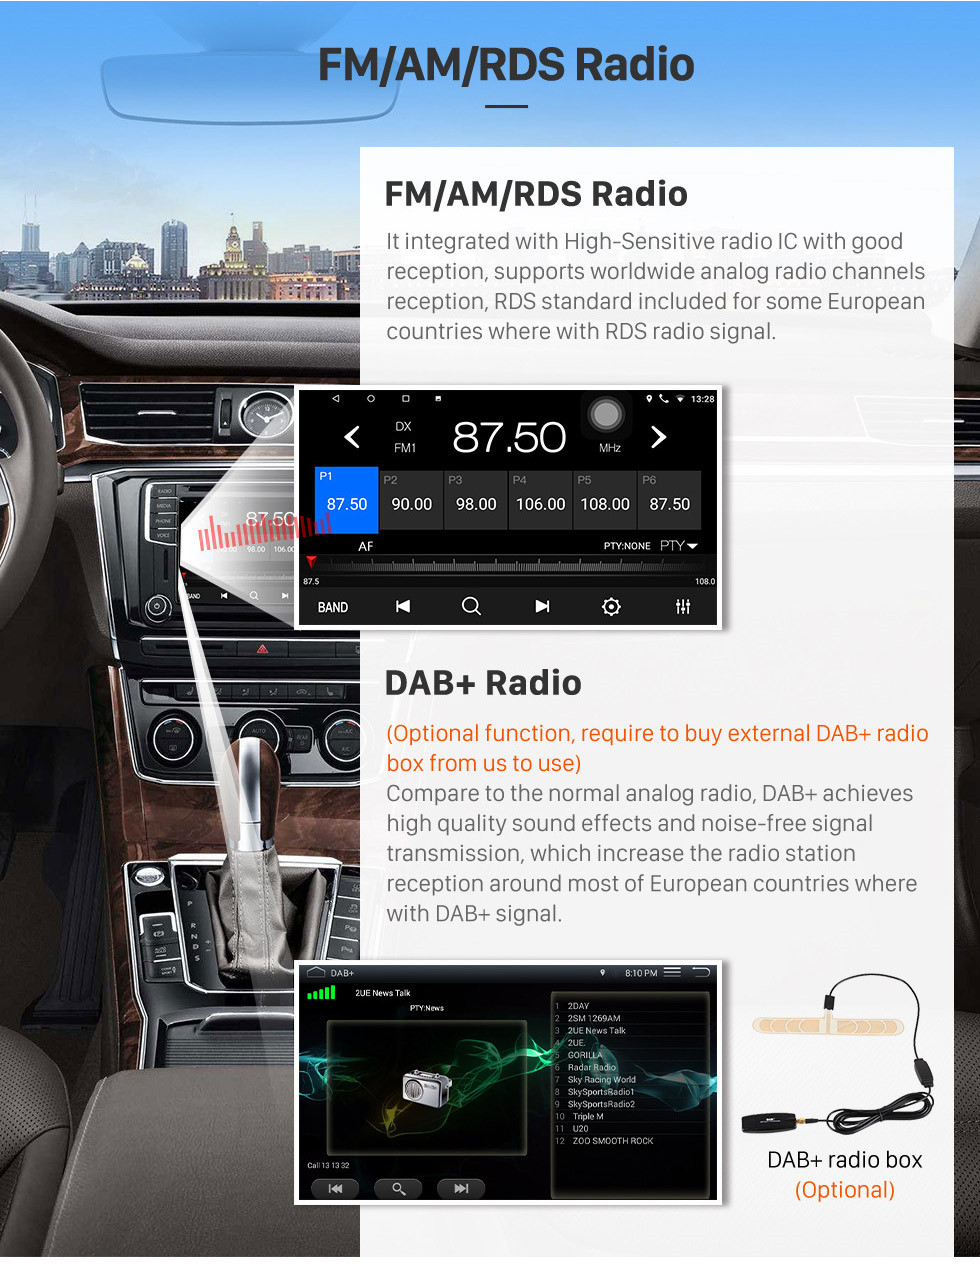 Seicane HD сенсорный экран 9-дюймовый Android 10.0 GPS-навигация Радио для 2007-2008 Ford S-Max Auto A / C с поддержкой Bluetooth AUX Carplay DAB + OBD